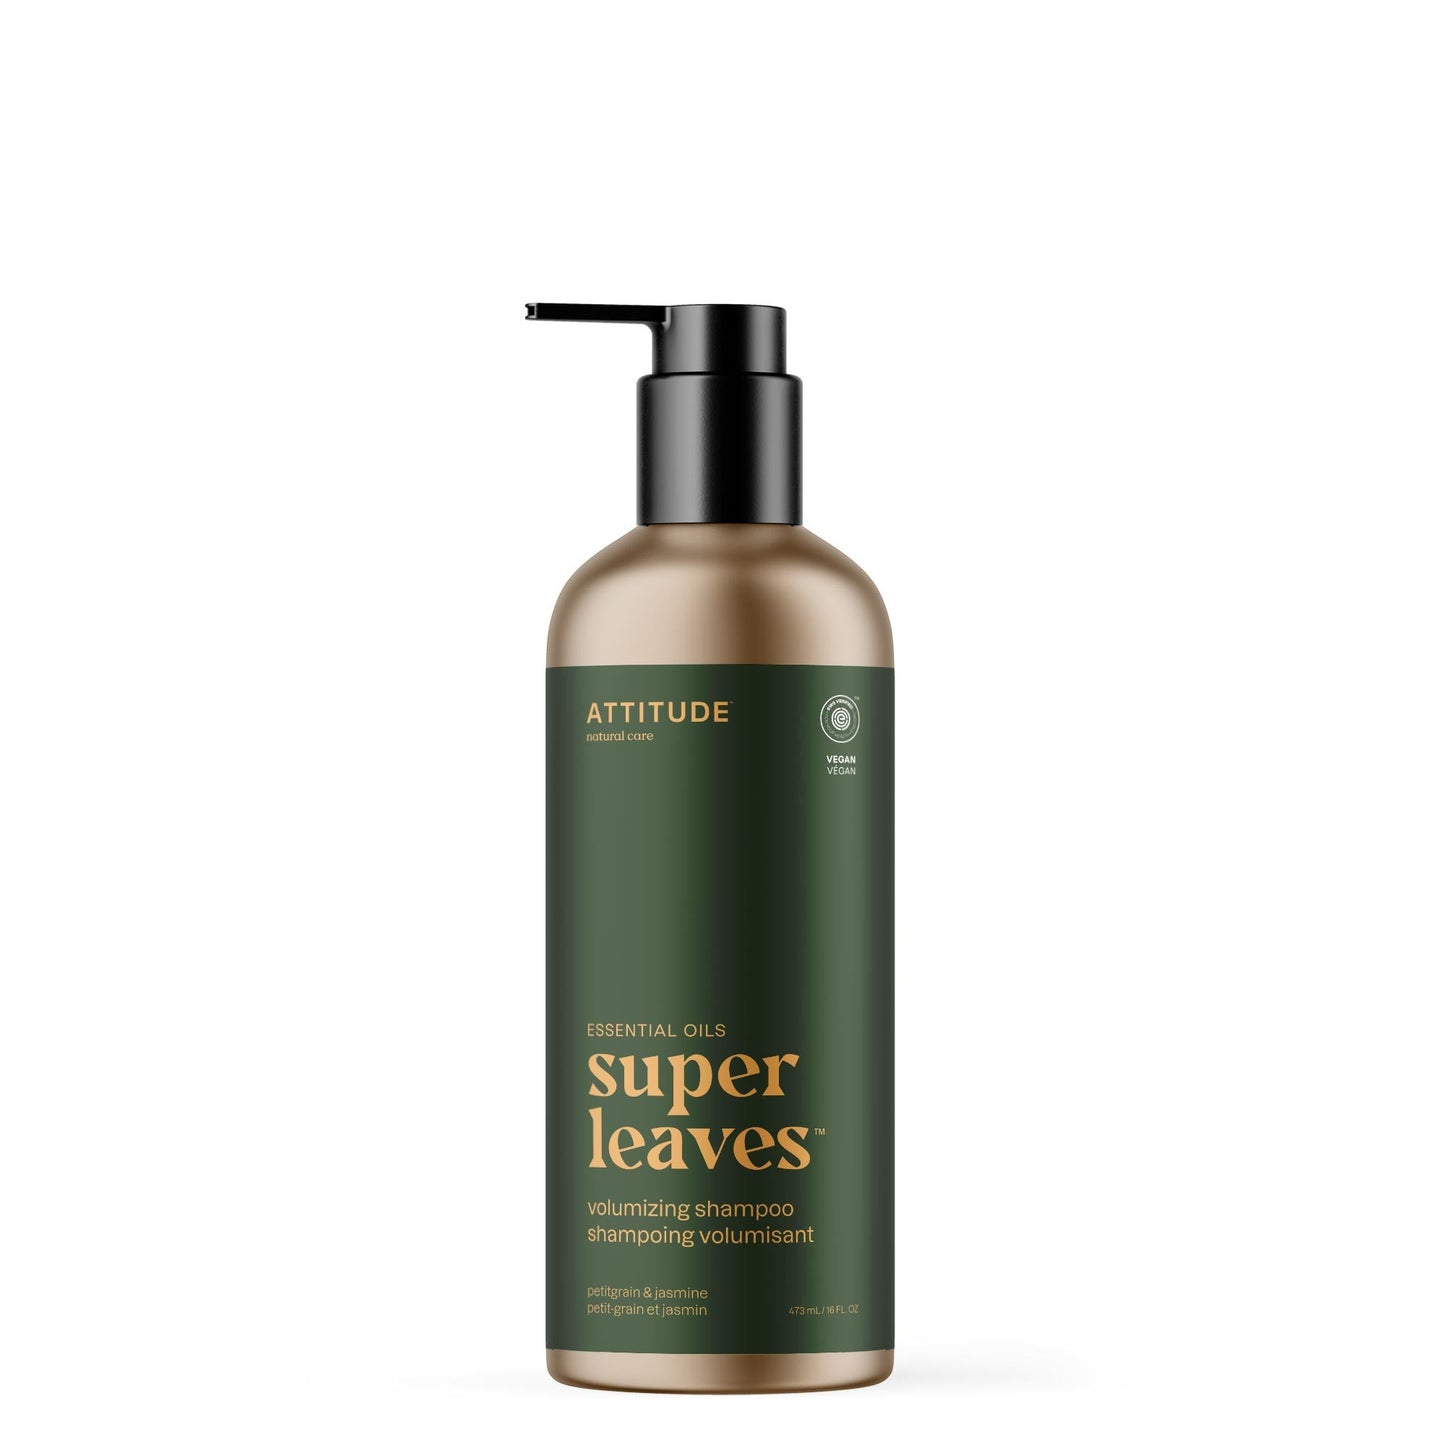 ATTITUDE Super Leaves Essential oil shampoo volumizing Petitgrain and jasmine 19101-btob_en?_main? 16 FL. OZ.